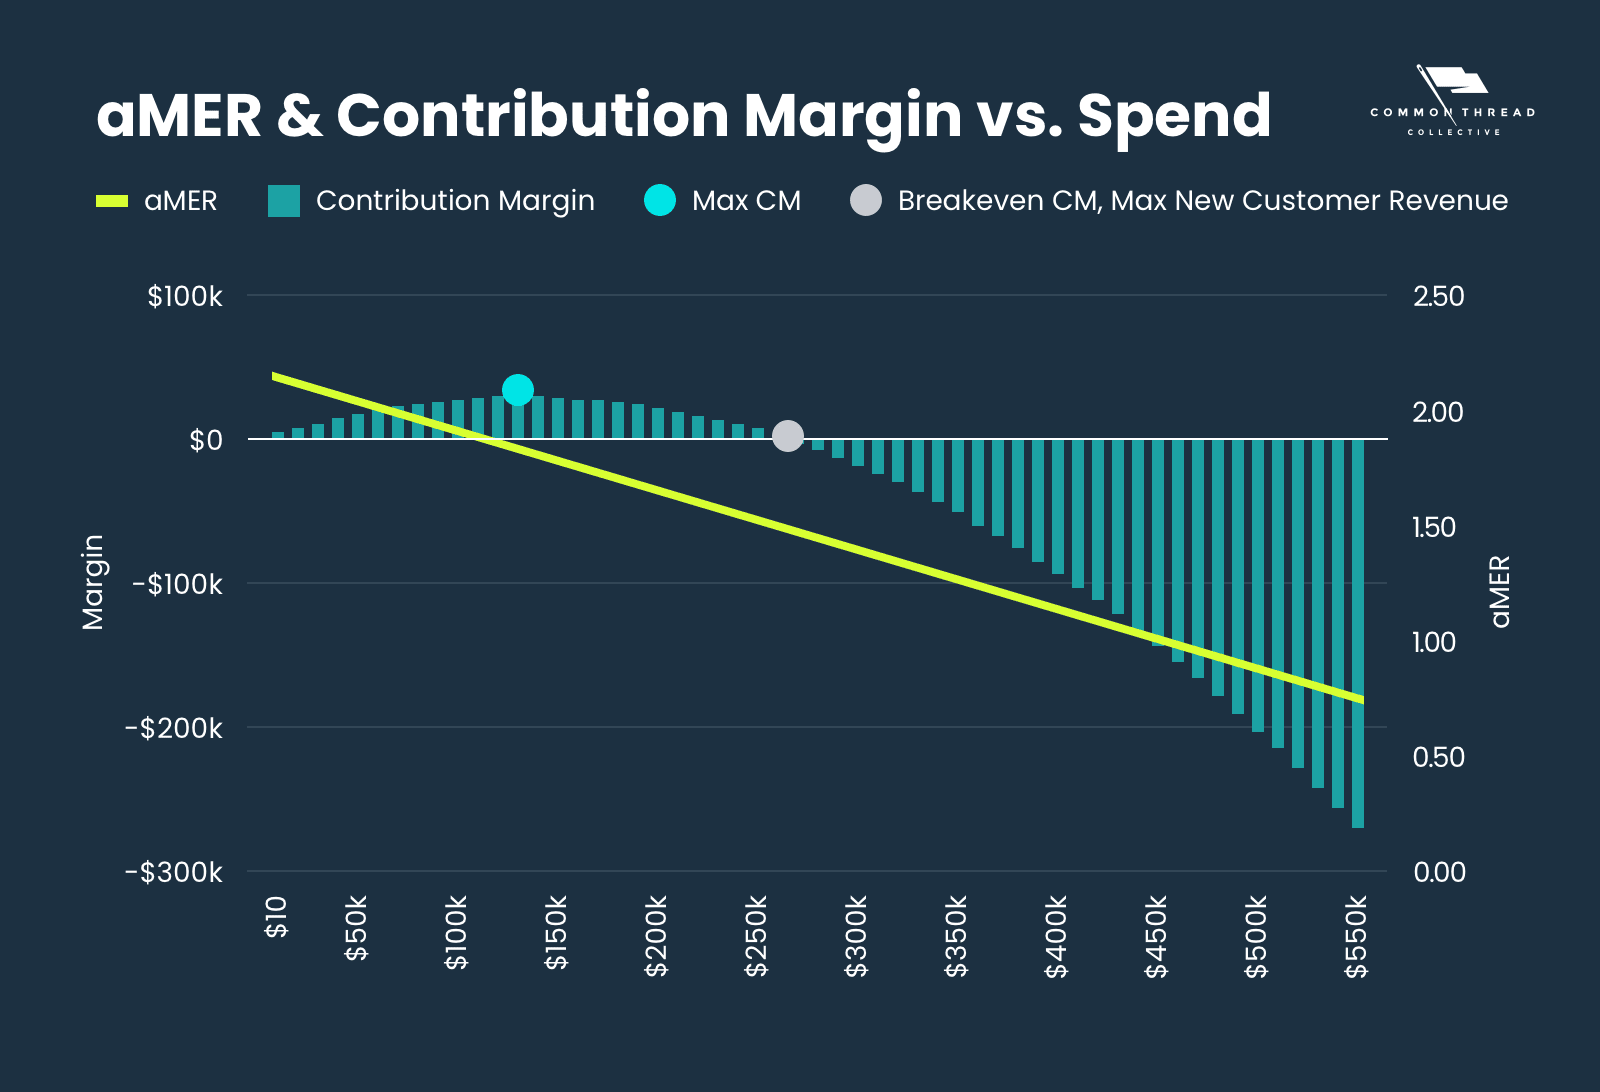 aMER & Contribution Margin vs. Spend